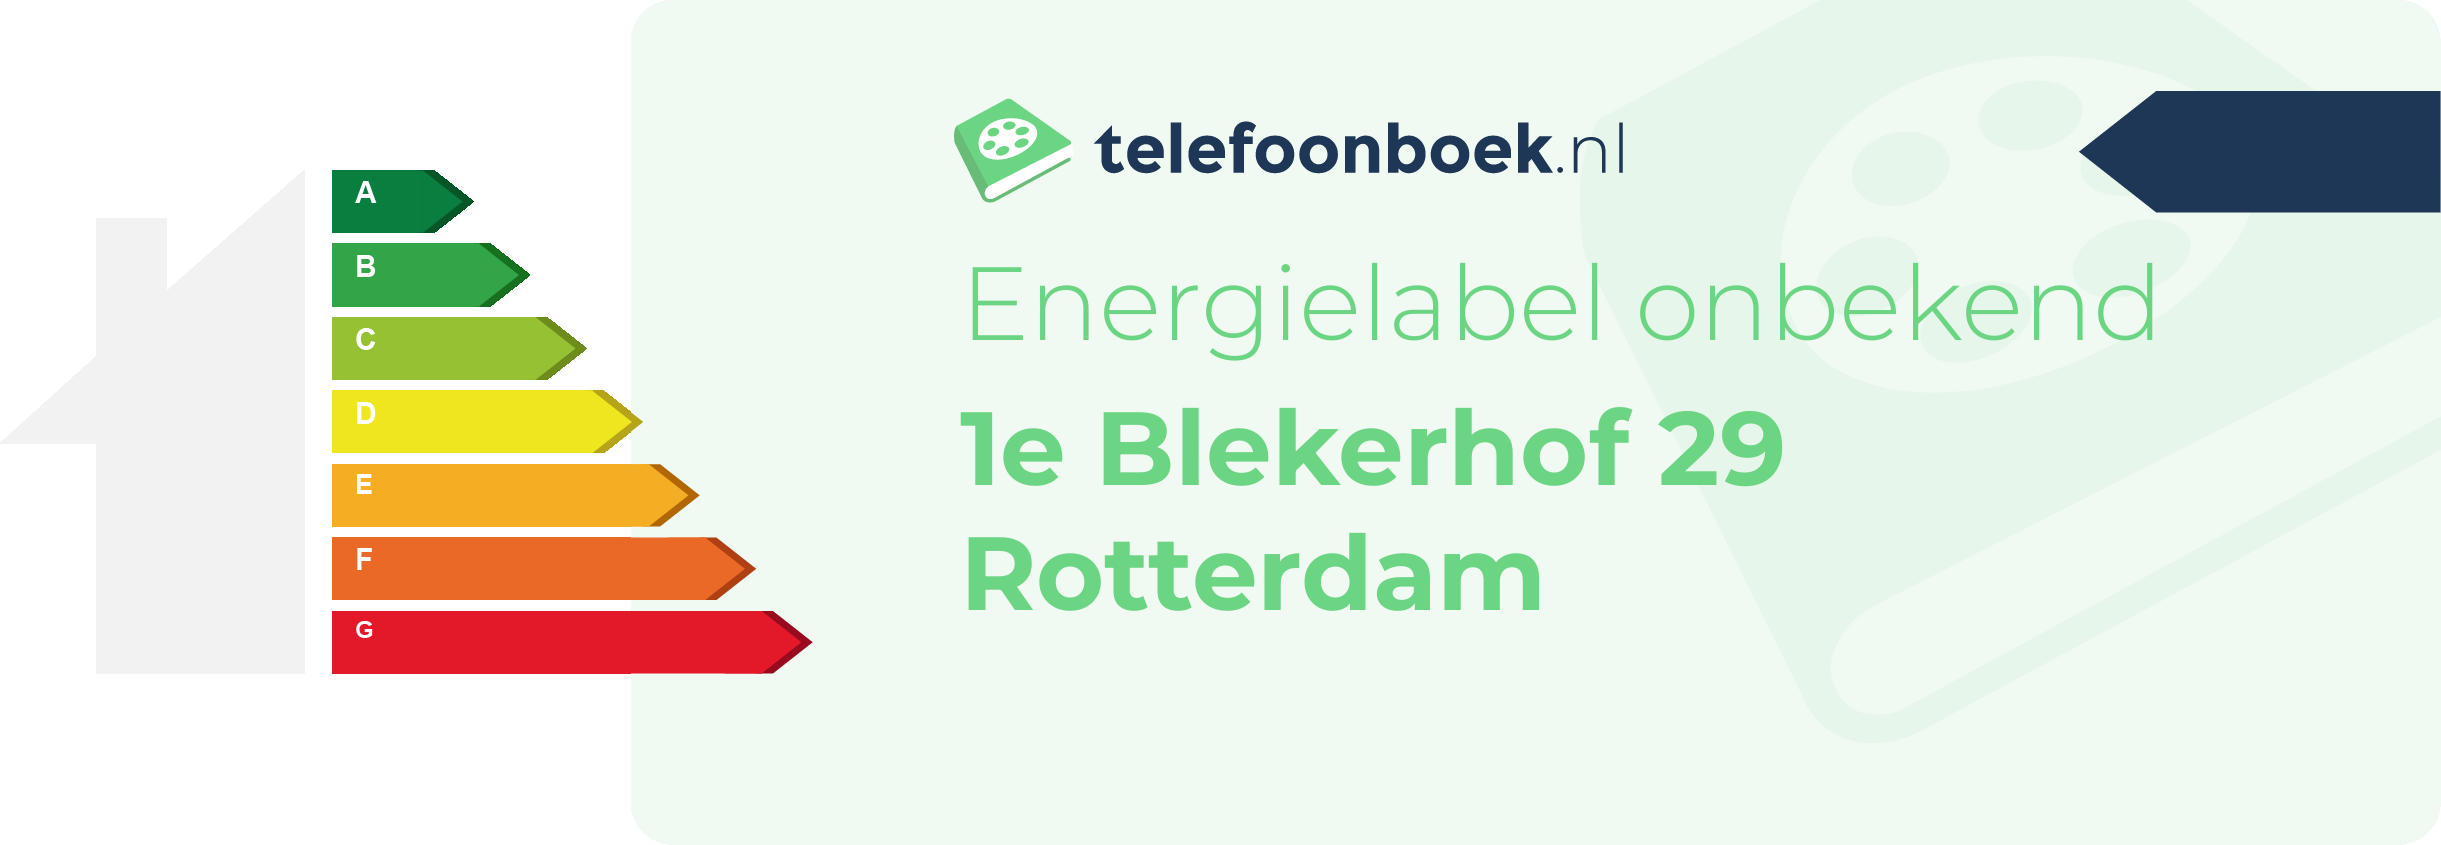 Energielabel 1e Blekerhof 29 Rotterdam